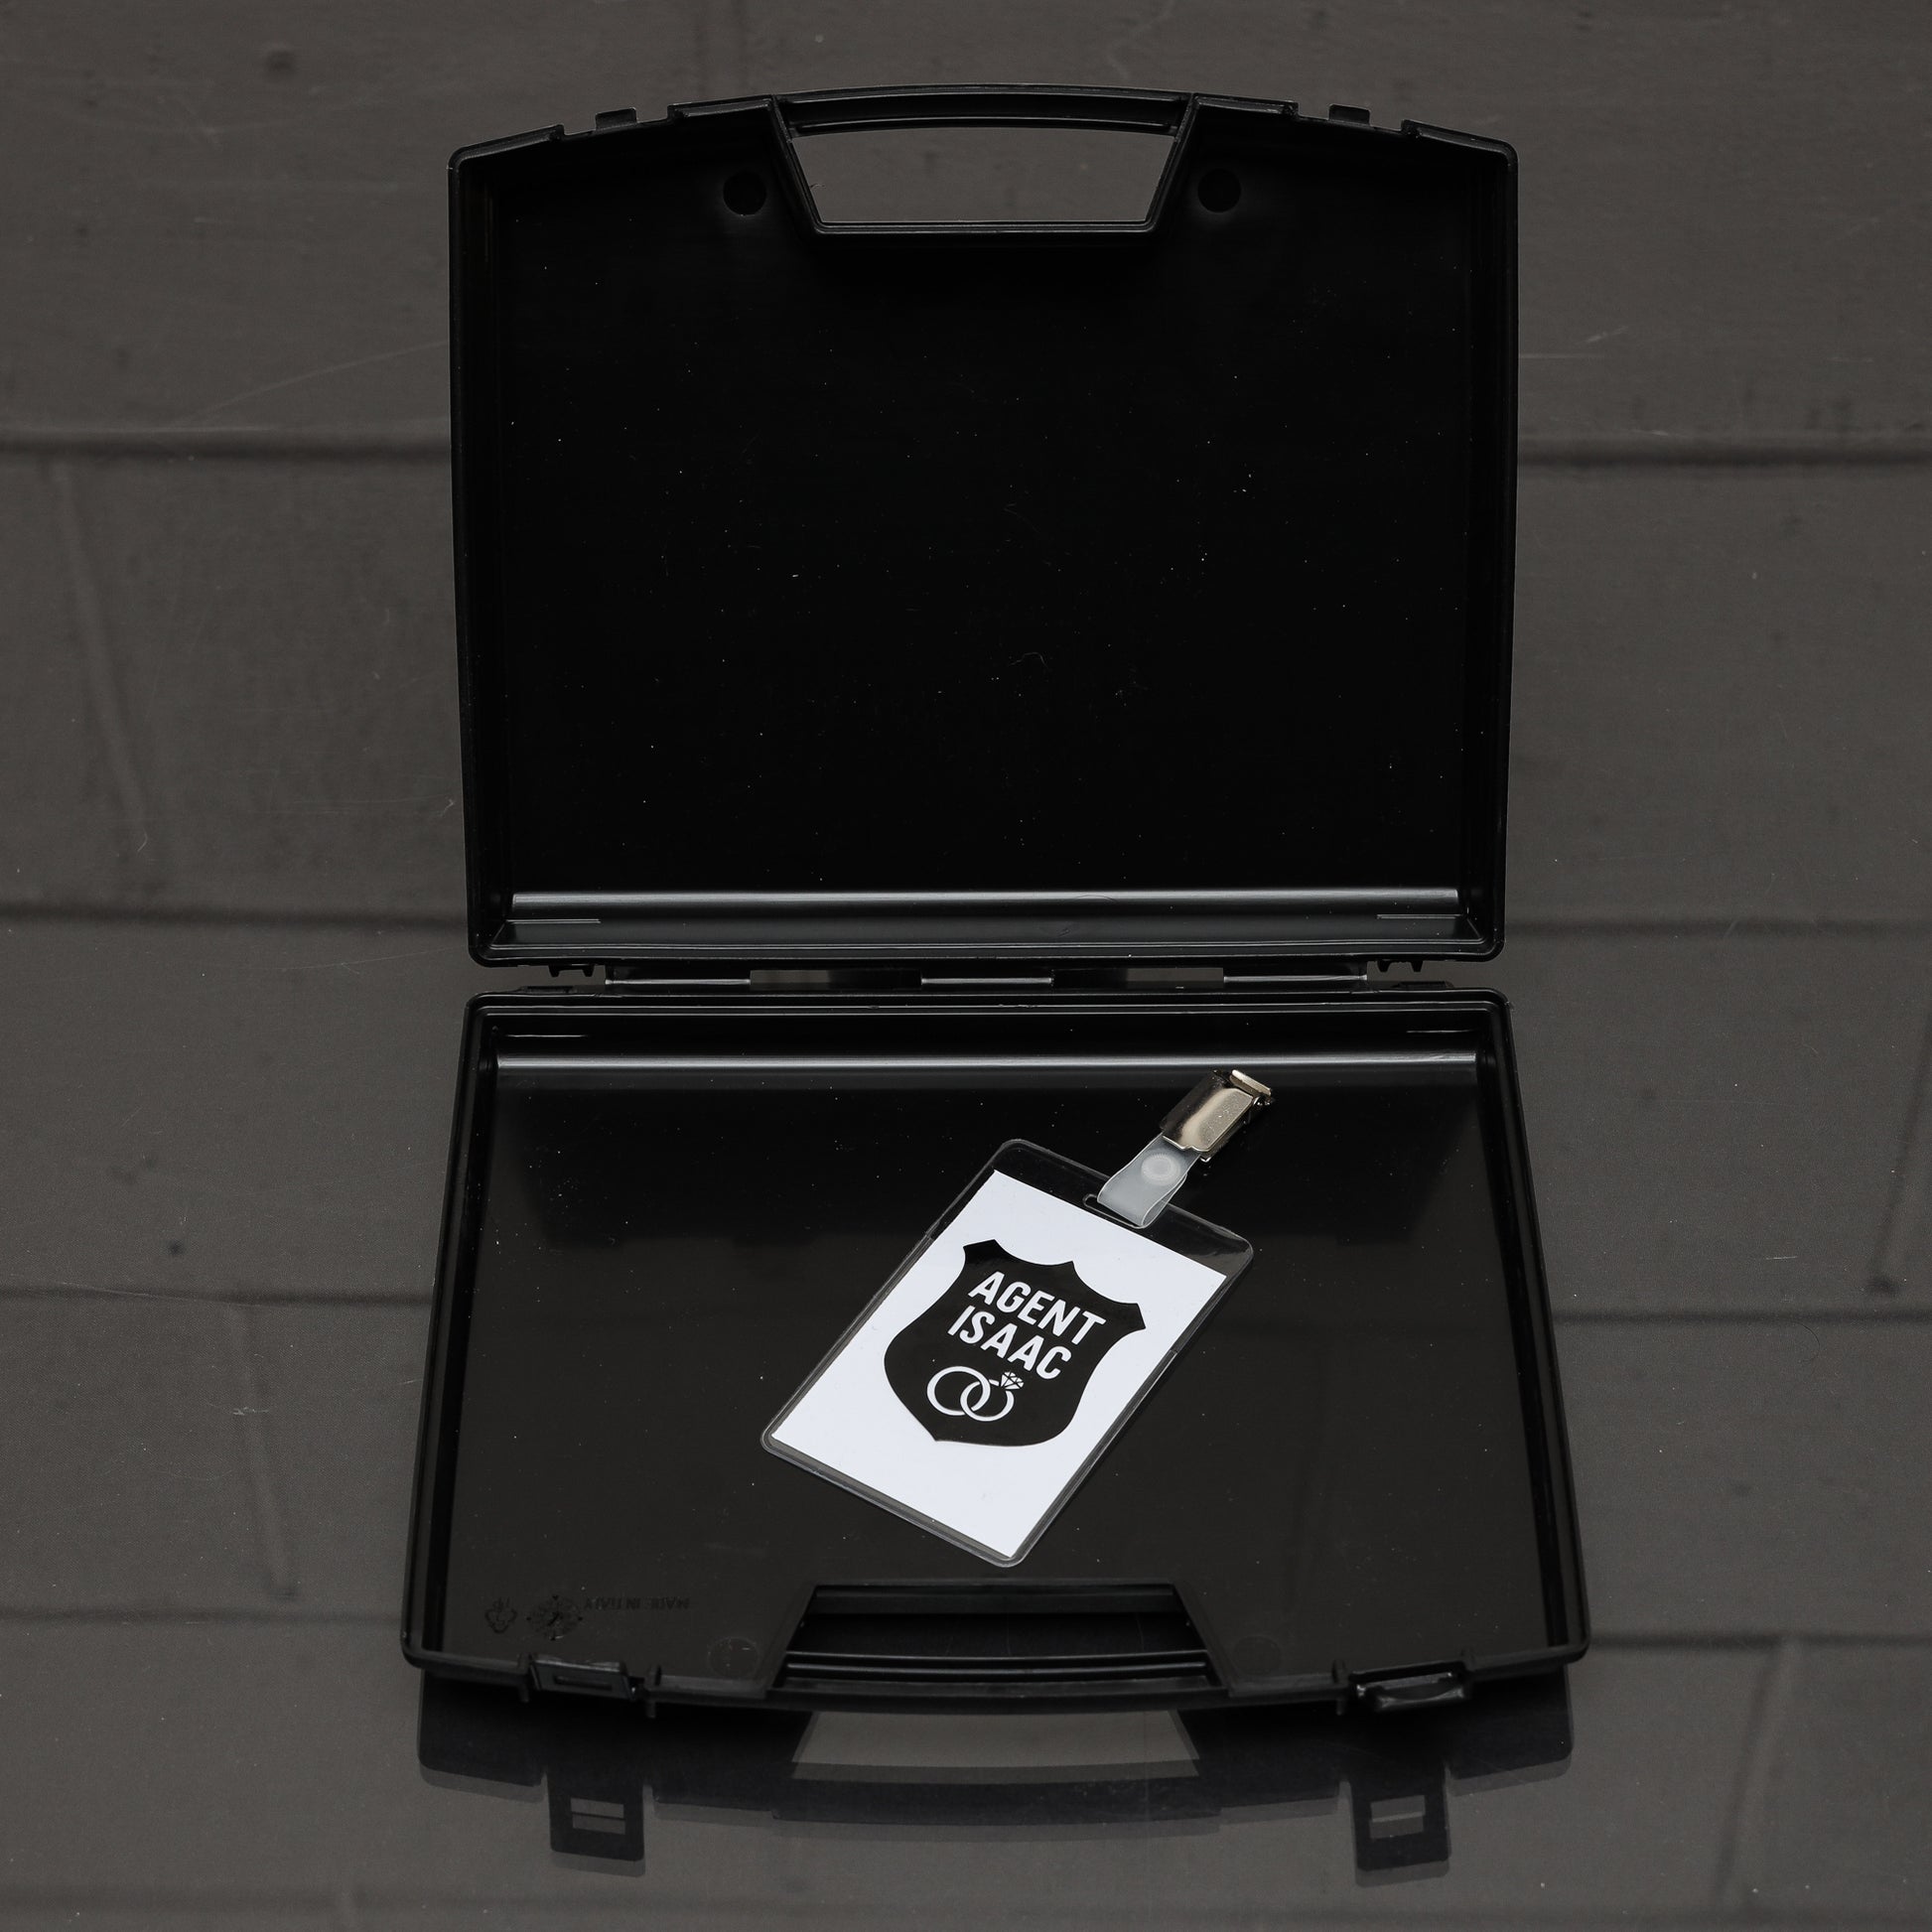 Personalised Pageboy Ring Security Box Briefcase  - Always Looking Good -   